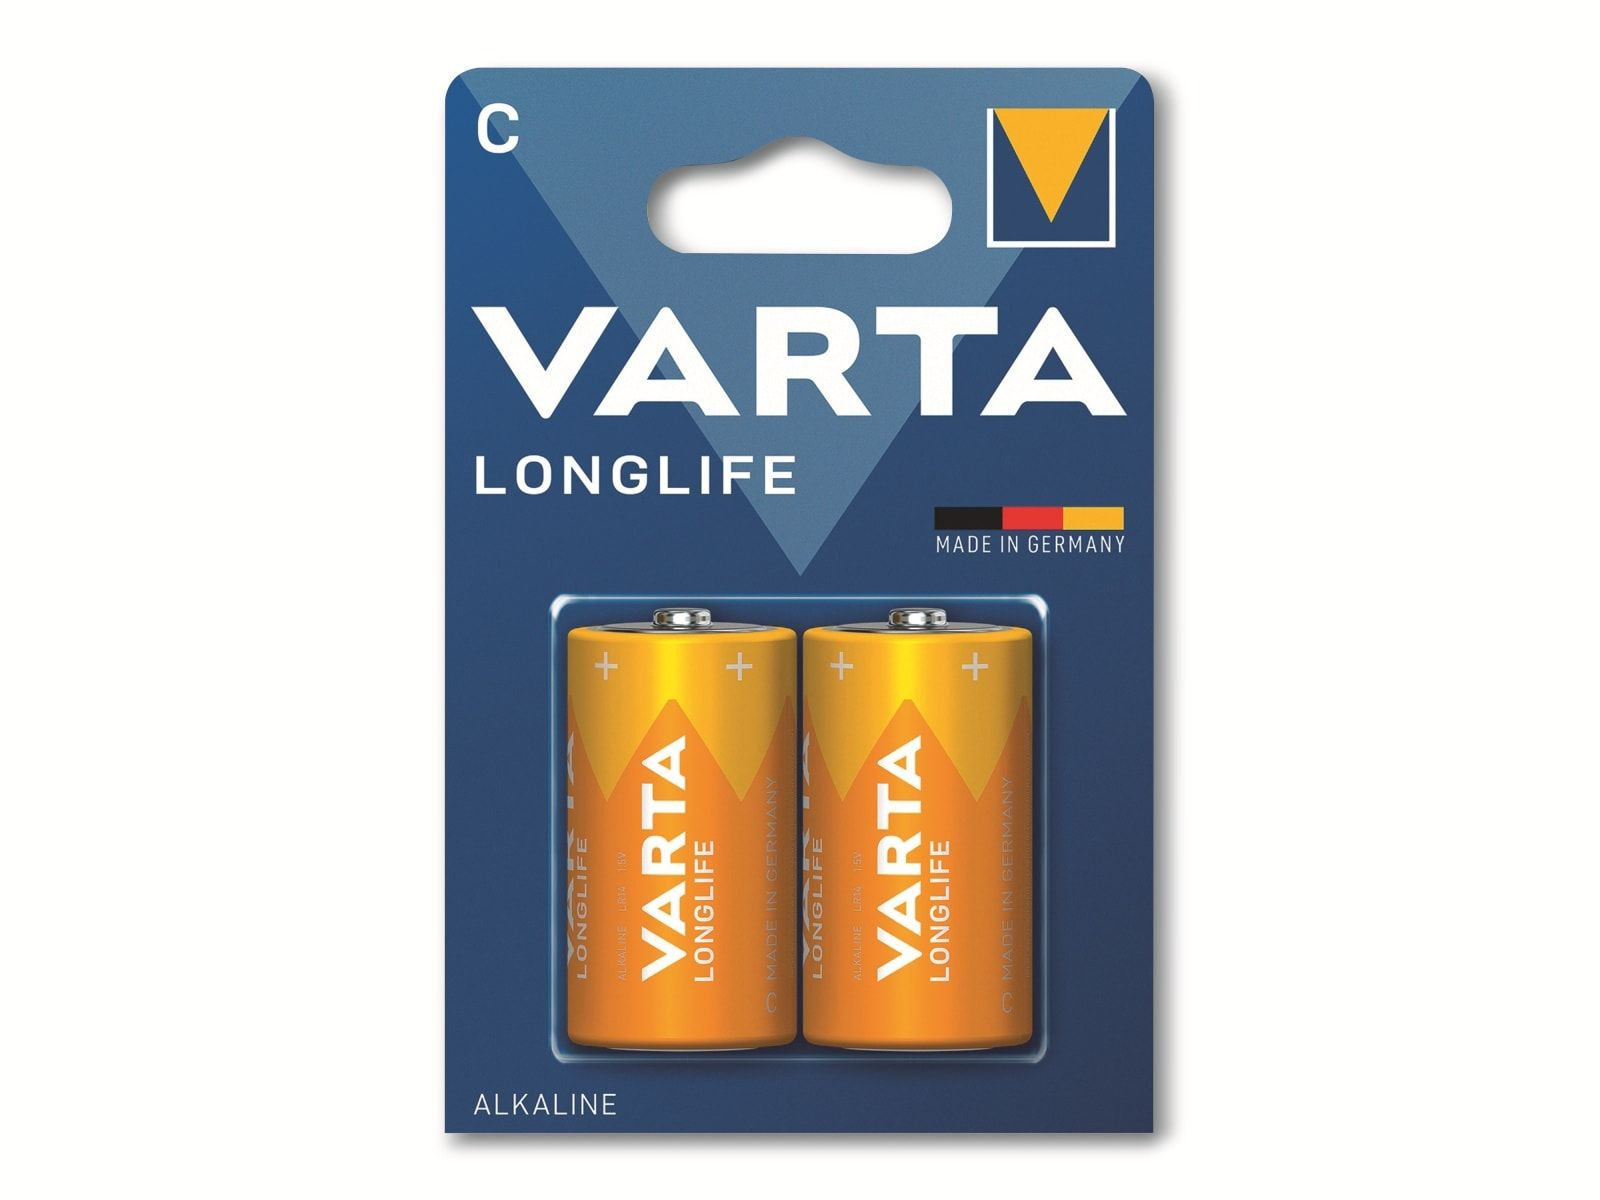 VARTA Longlife Baby C Batterie 4114 Ah Blister) Batterie, Distancia 7.6 LR14 AlMn, Volt, Mando (2er 1.5